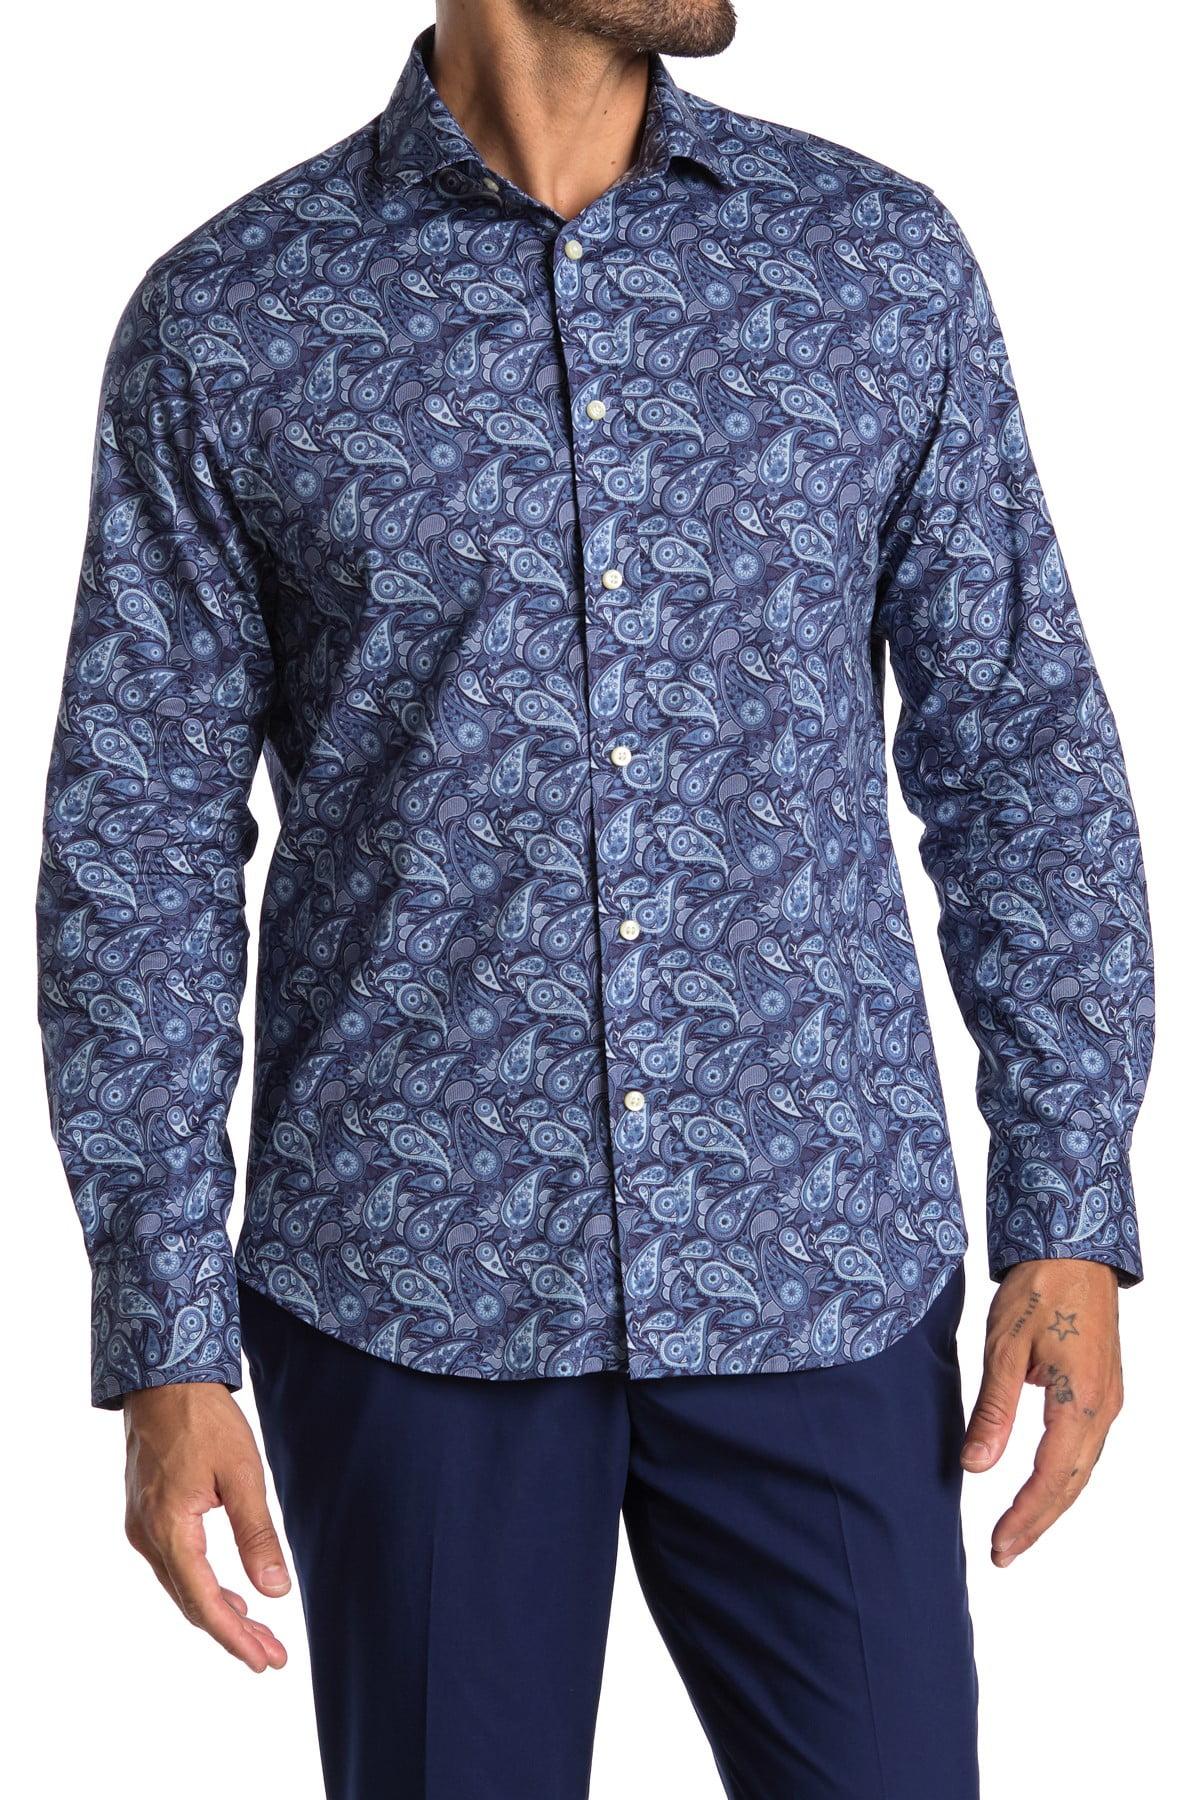 Thomas Dean Paisley Print Dress Shirt in Navy (Blue) for Men - Lyst